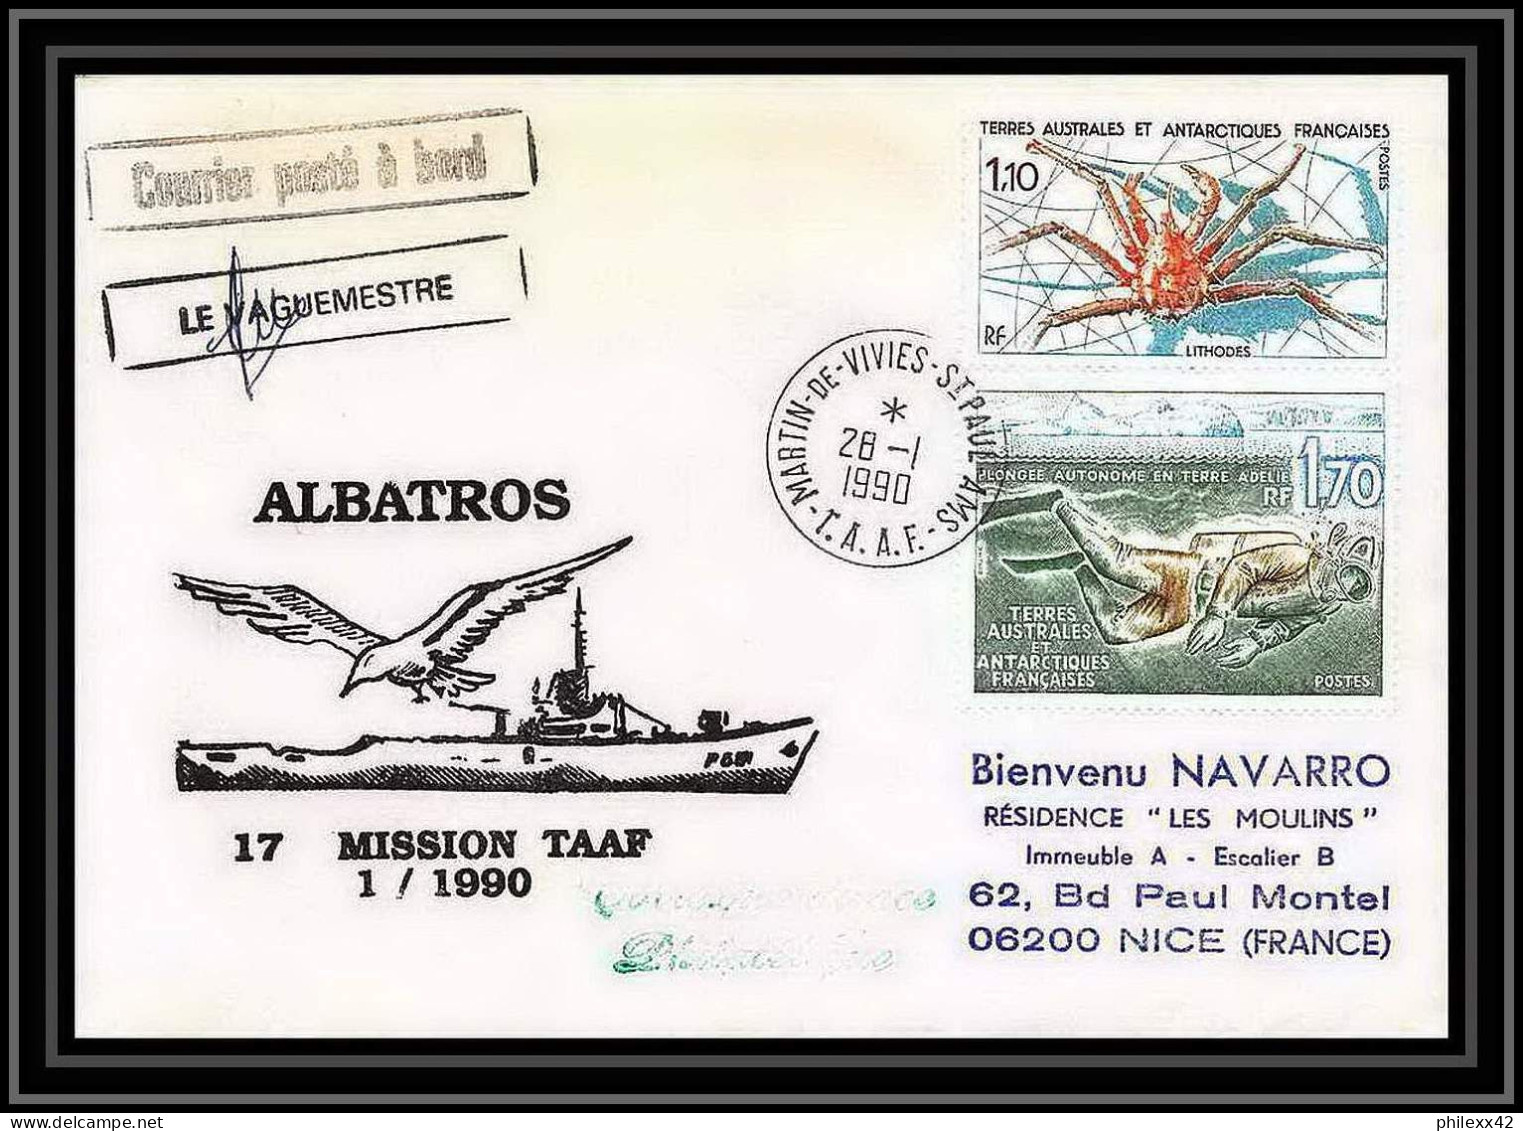 1677 Patrouilleur Albatros 17 Mission 1 28/1/1990 Signé Signed TAAF Antarctic Terres Australes Lettre (cover) - Covers & Documents